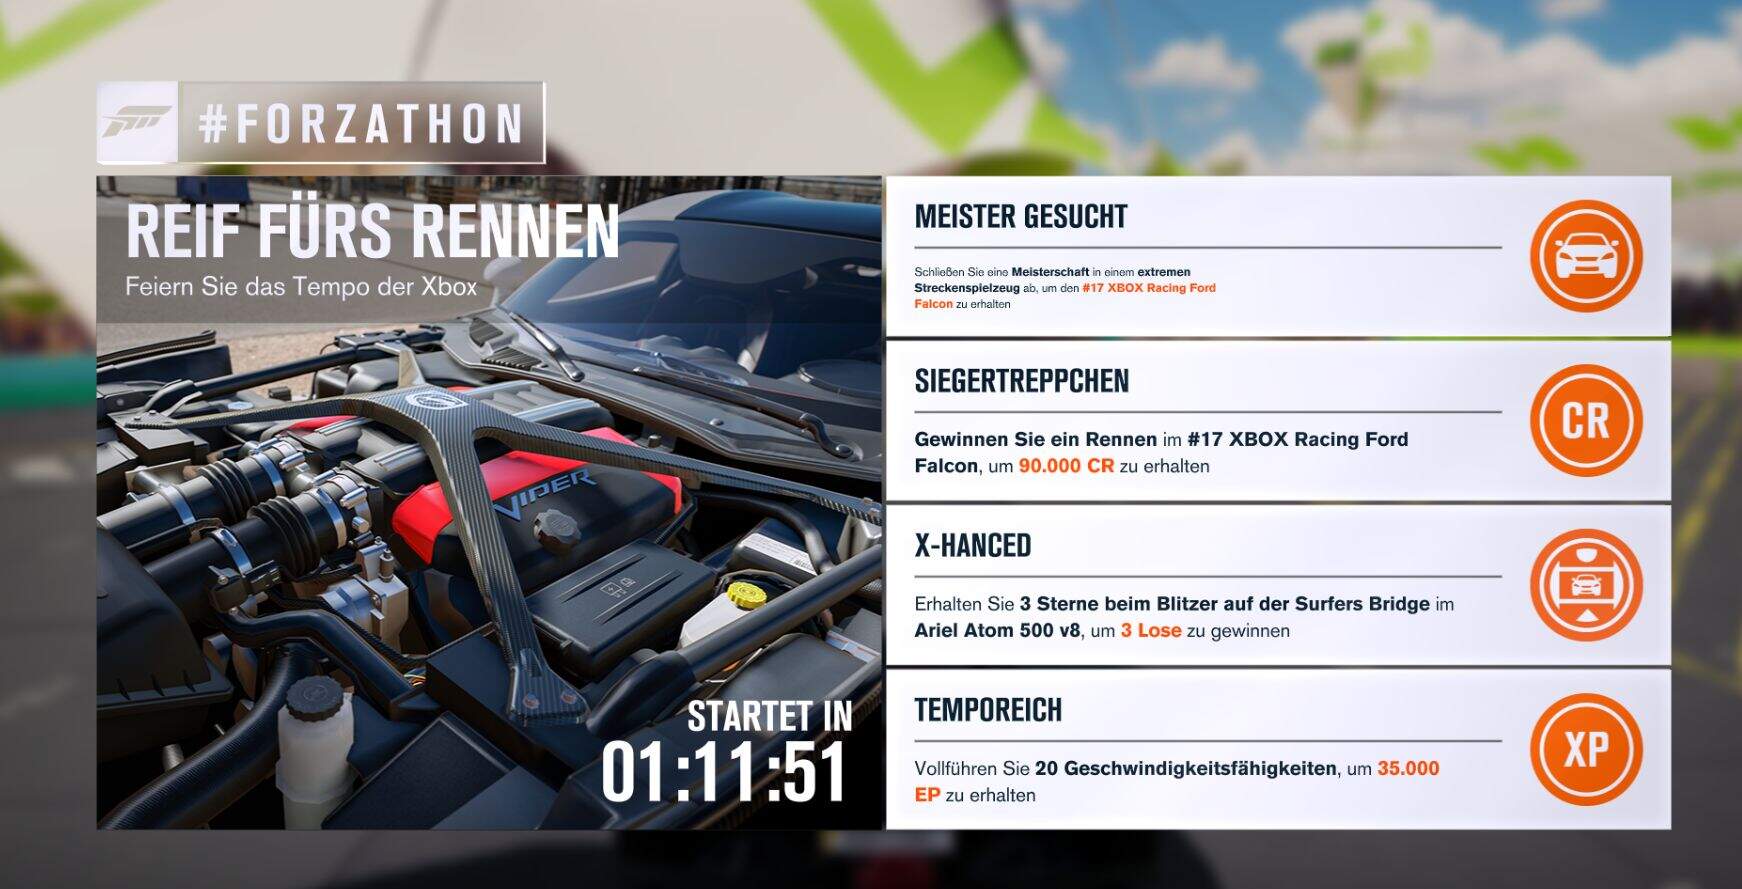 Forza Horizon 3 #Forzathon KW 45 – Reif fürs Rennen